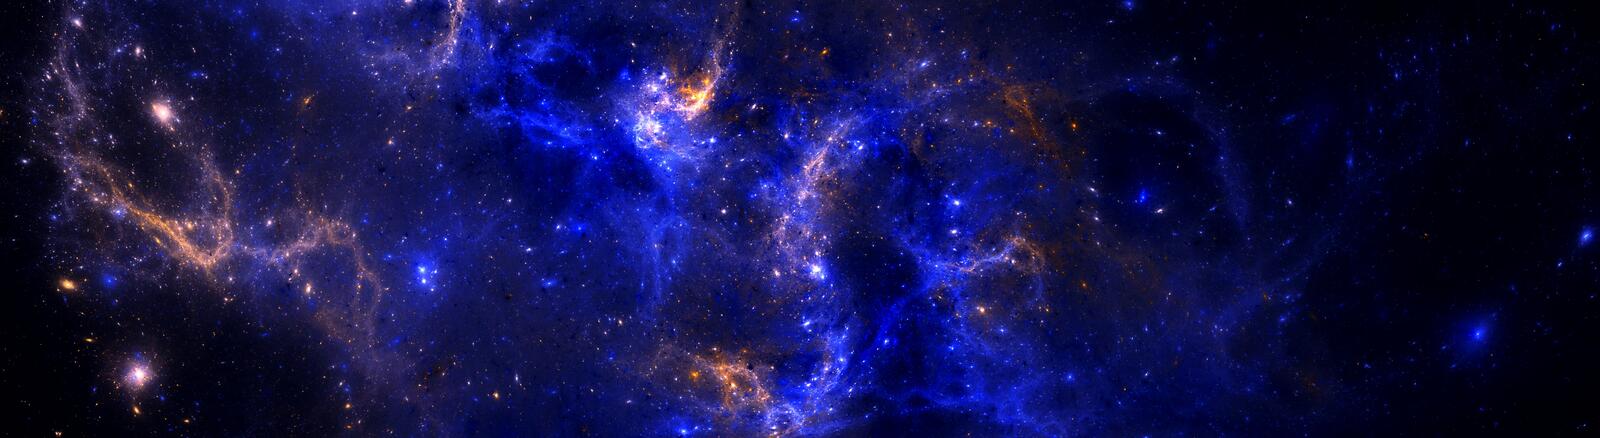 Wallpapers wallpaper galaxy blue nebula stars on the desktop